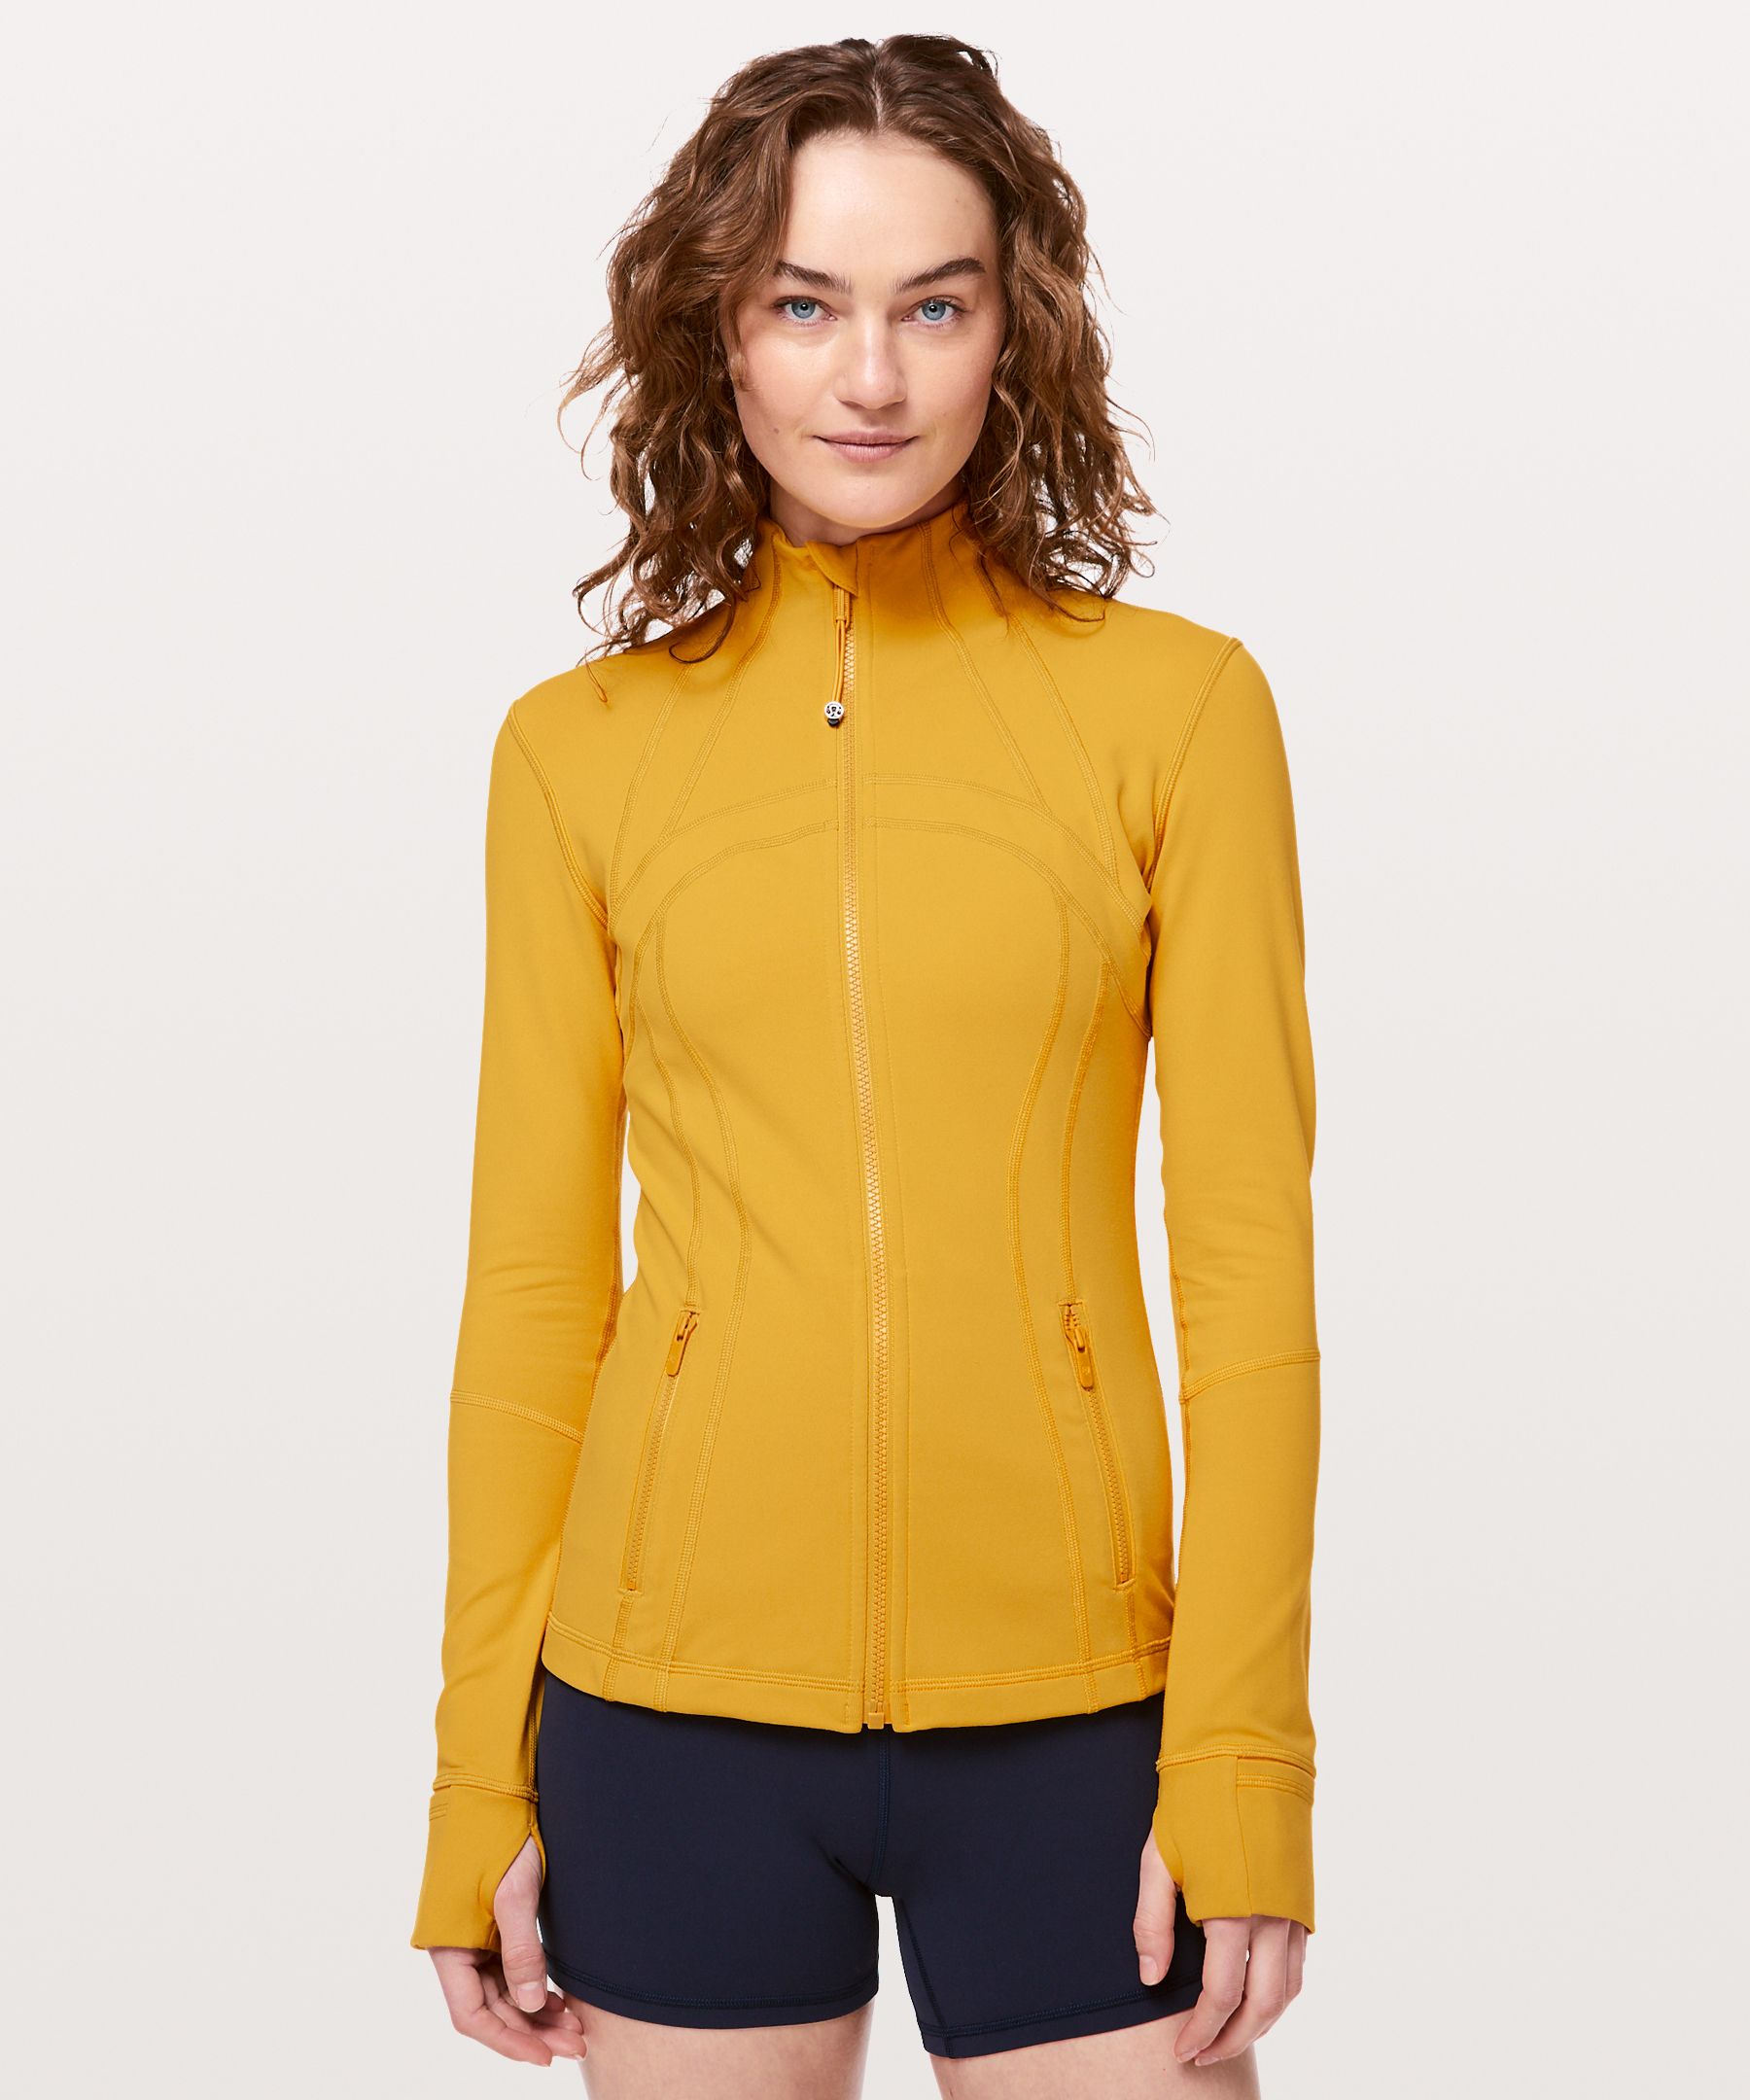 lululemon yellow jacket